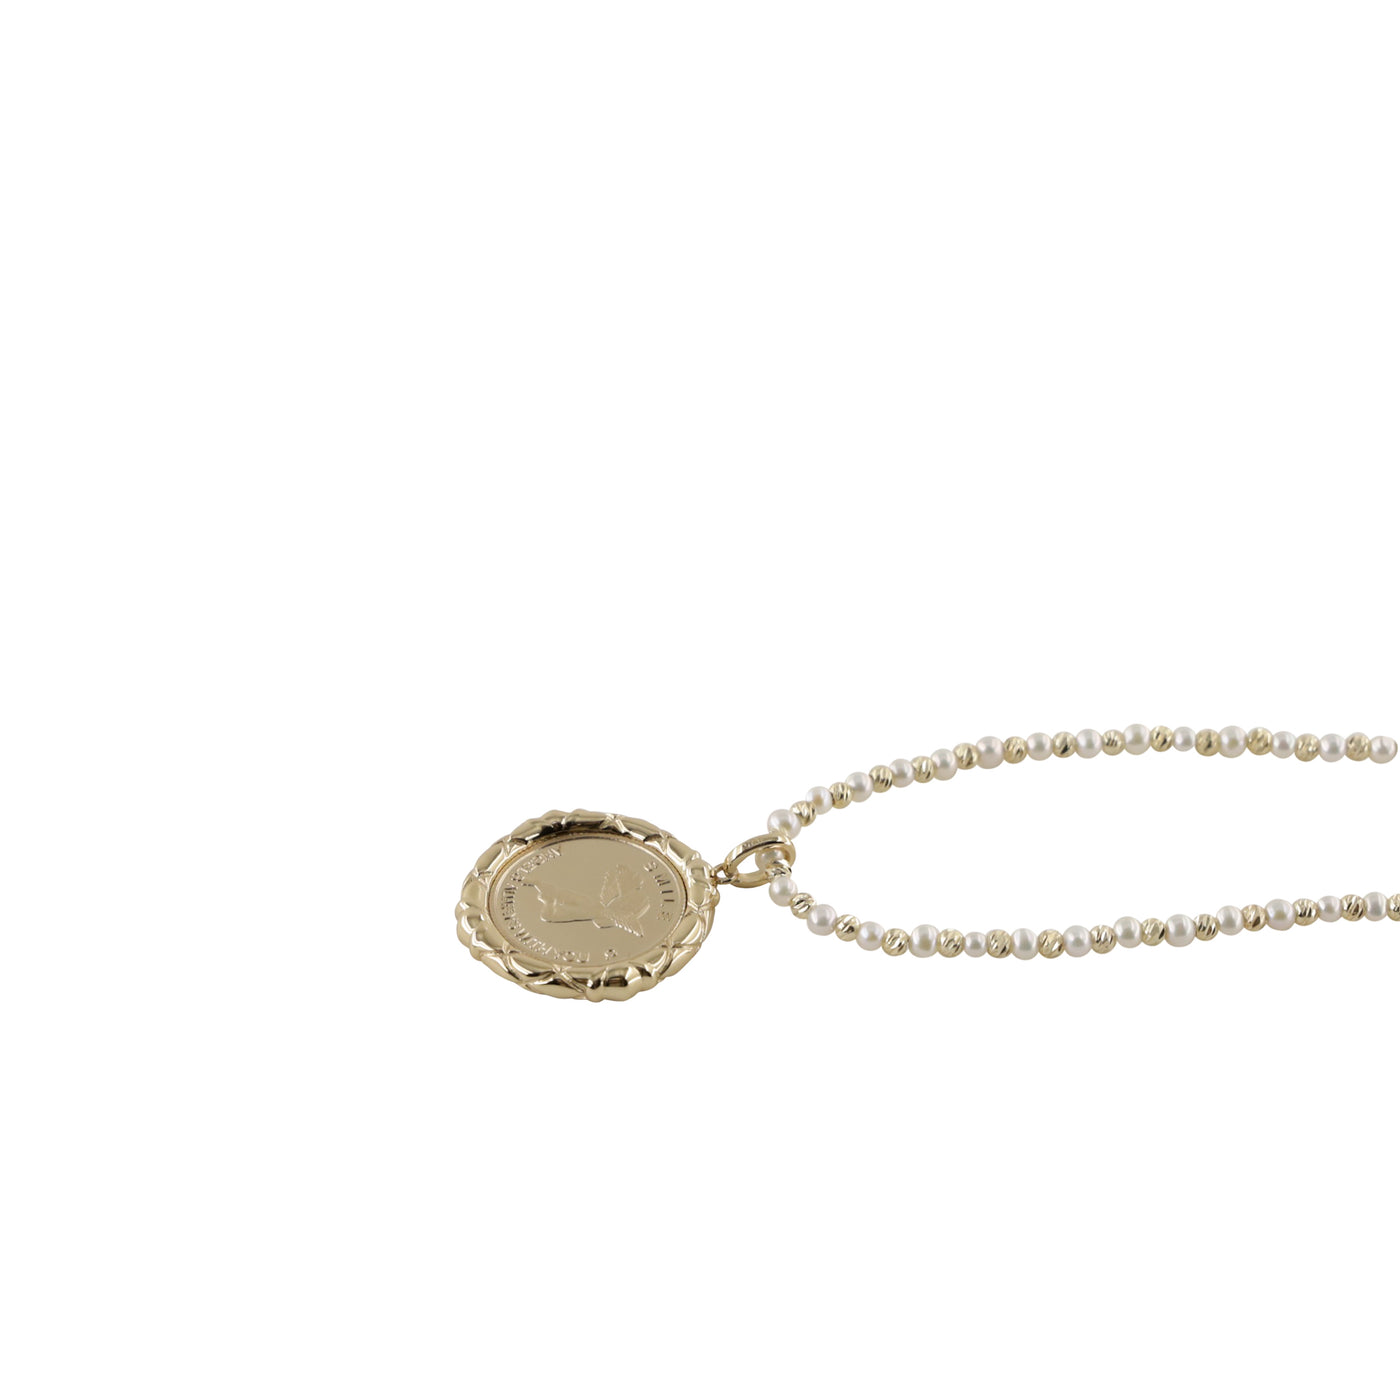 Eros Pearl Necklace | Angela Jewellery Australia